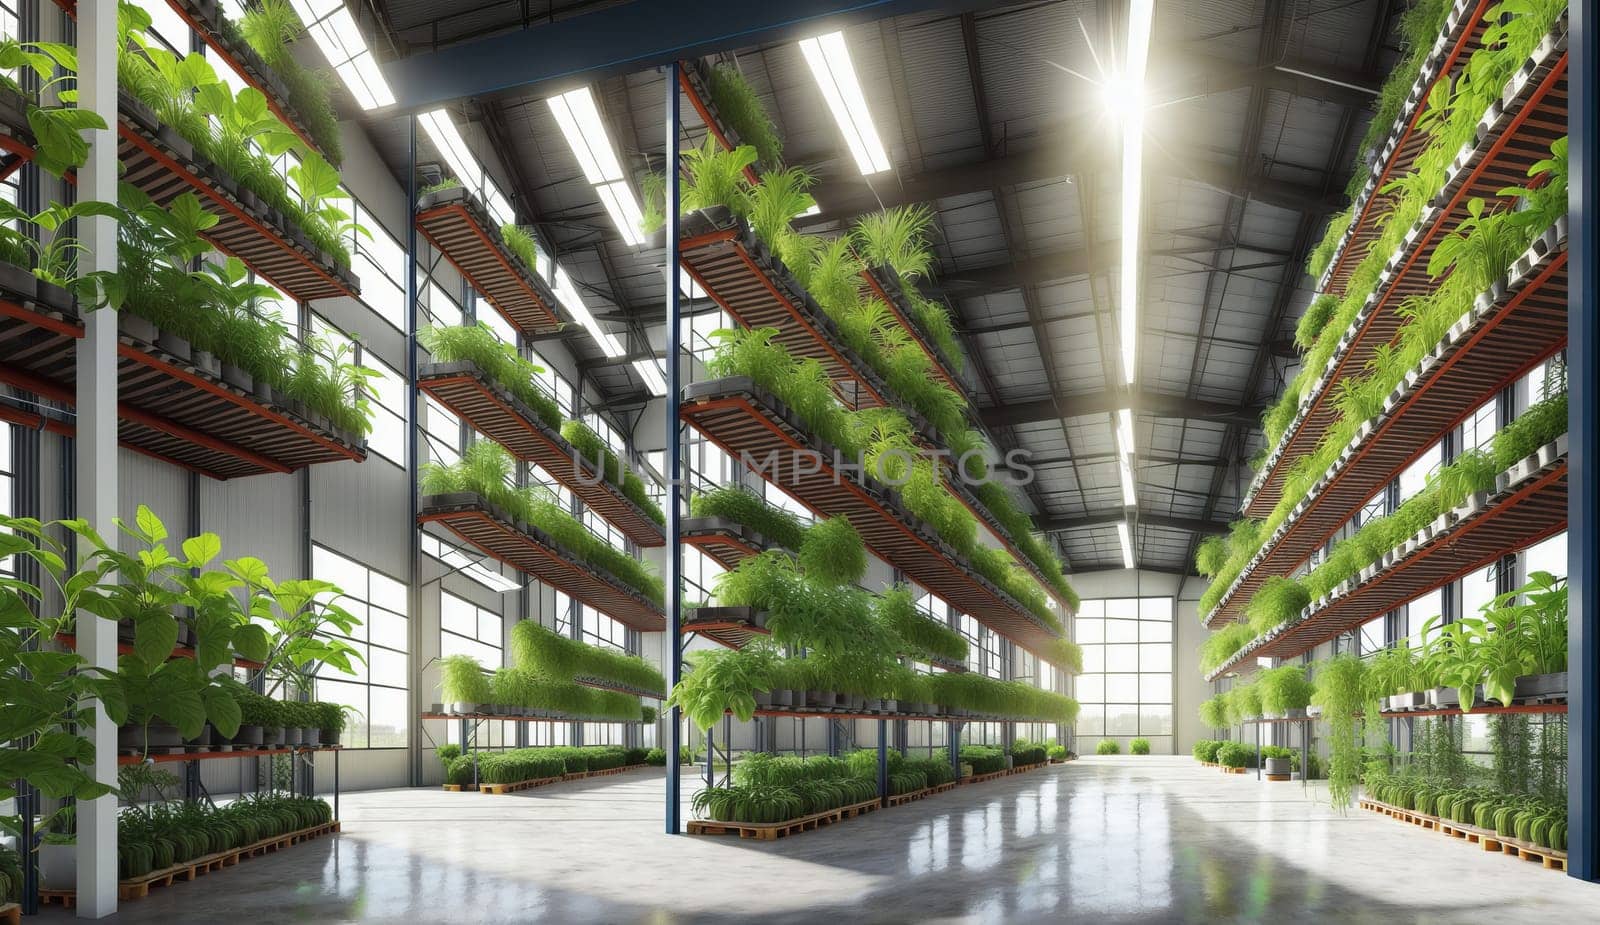 Vast warehouse housing numerous green plants and vegetation by DCStudio